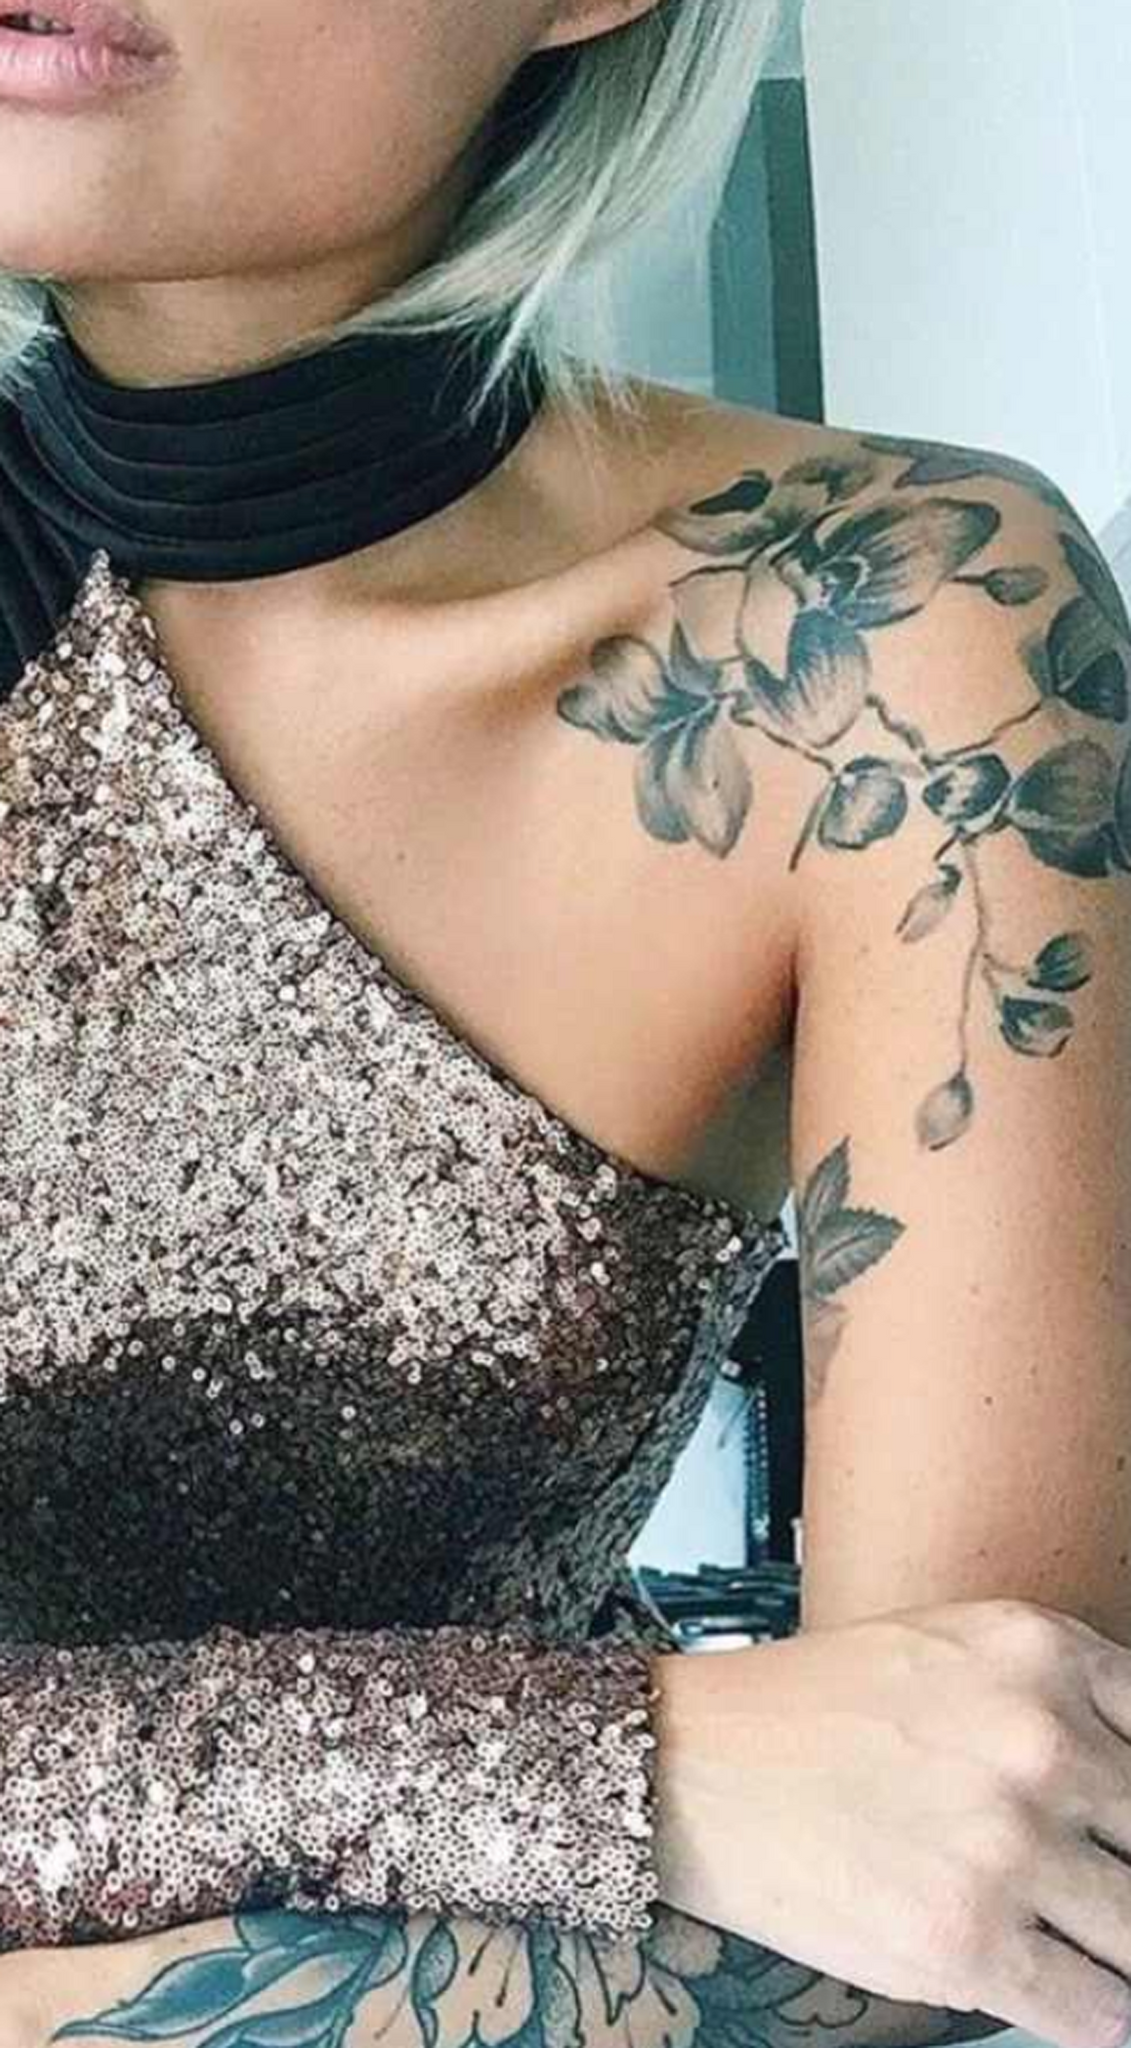 Unique Flower Shoulder Tattoo Ideas - Full Arm Sleeve Cherry Blossom Tatouage for Women - Unique Black Ideas Del Tatuaje - www.MyBodiArt.com